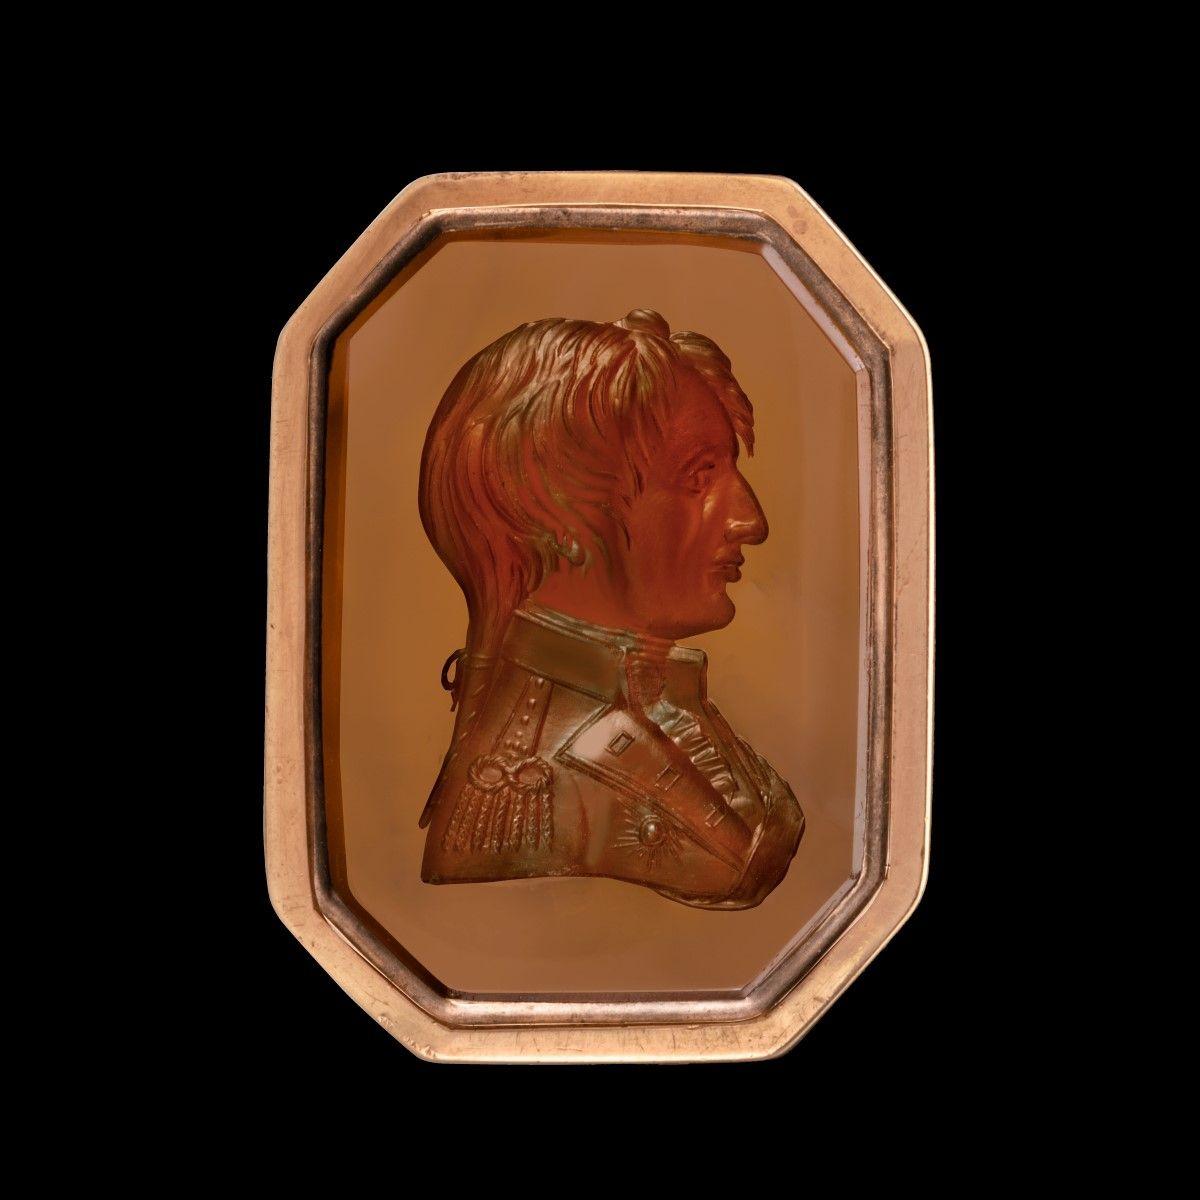 A hardstone intaglio portrait seal of Admiral Viscount Nelson